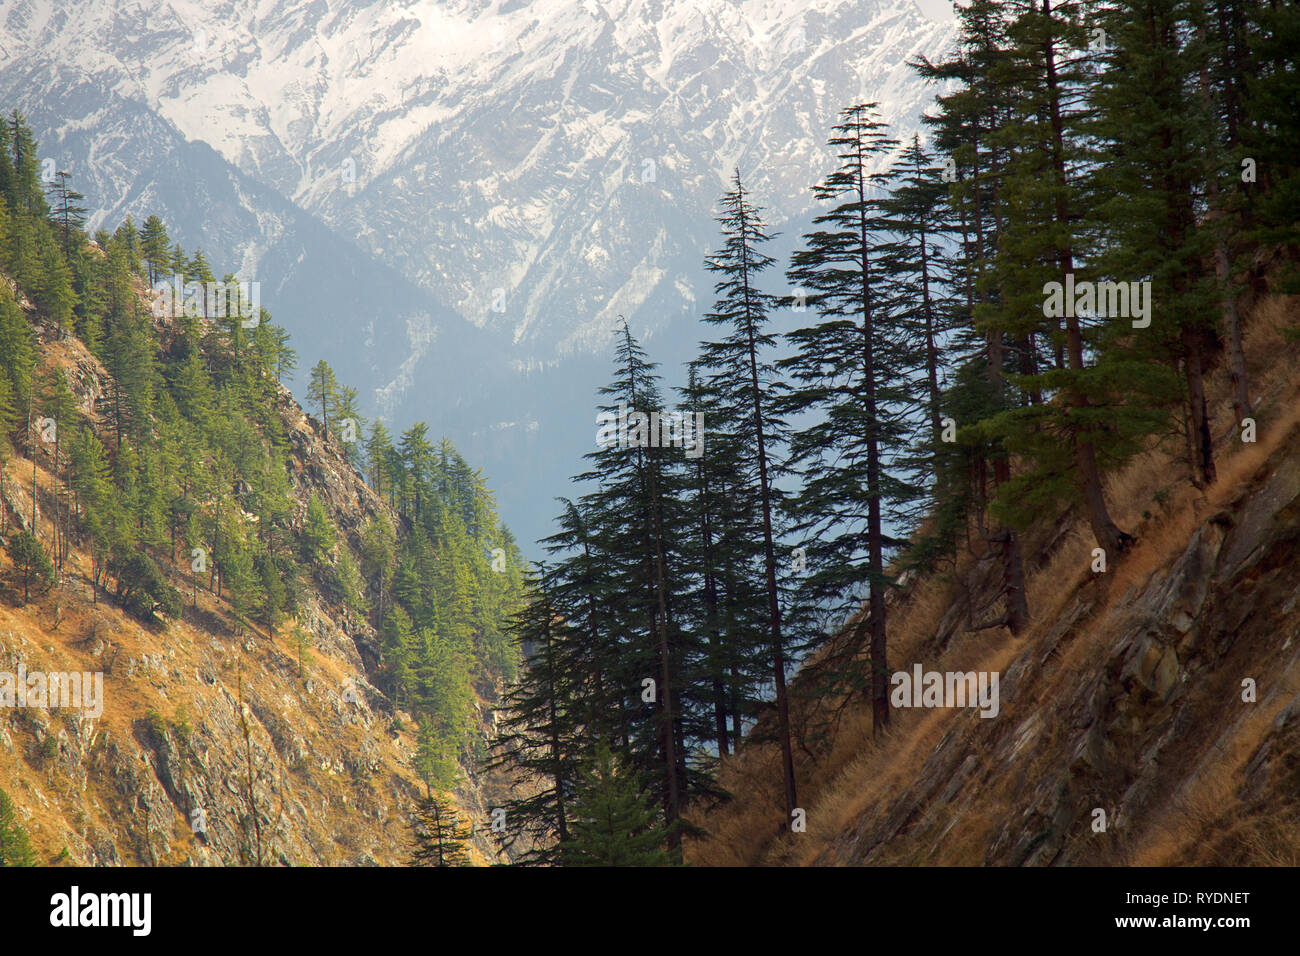 Pre-Himalayas forest consists of Himalayan cedar (deodar, Cedrus deodara) on the right. Coniferous deciduous forest on mountain slopes. India, mountai Stock Photo